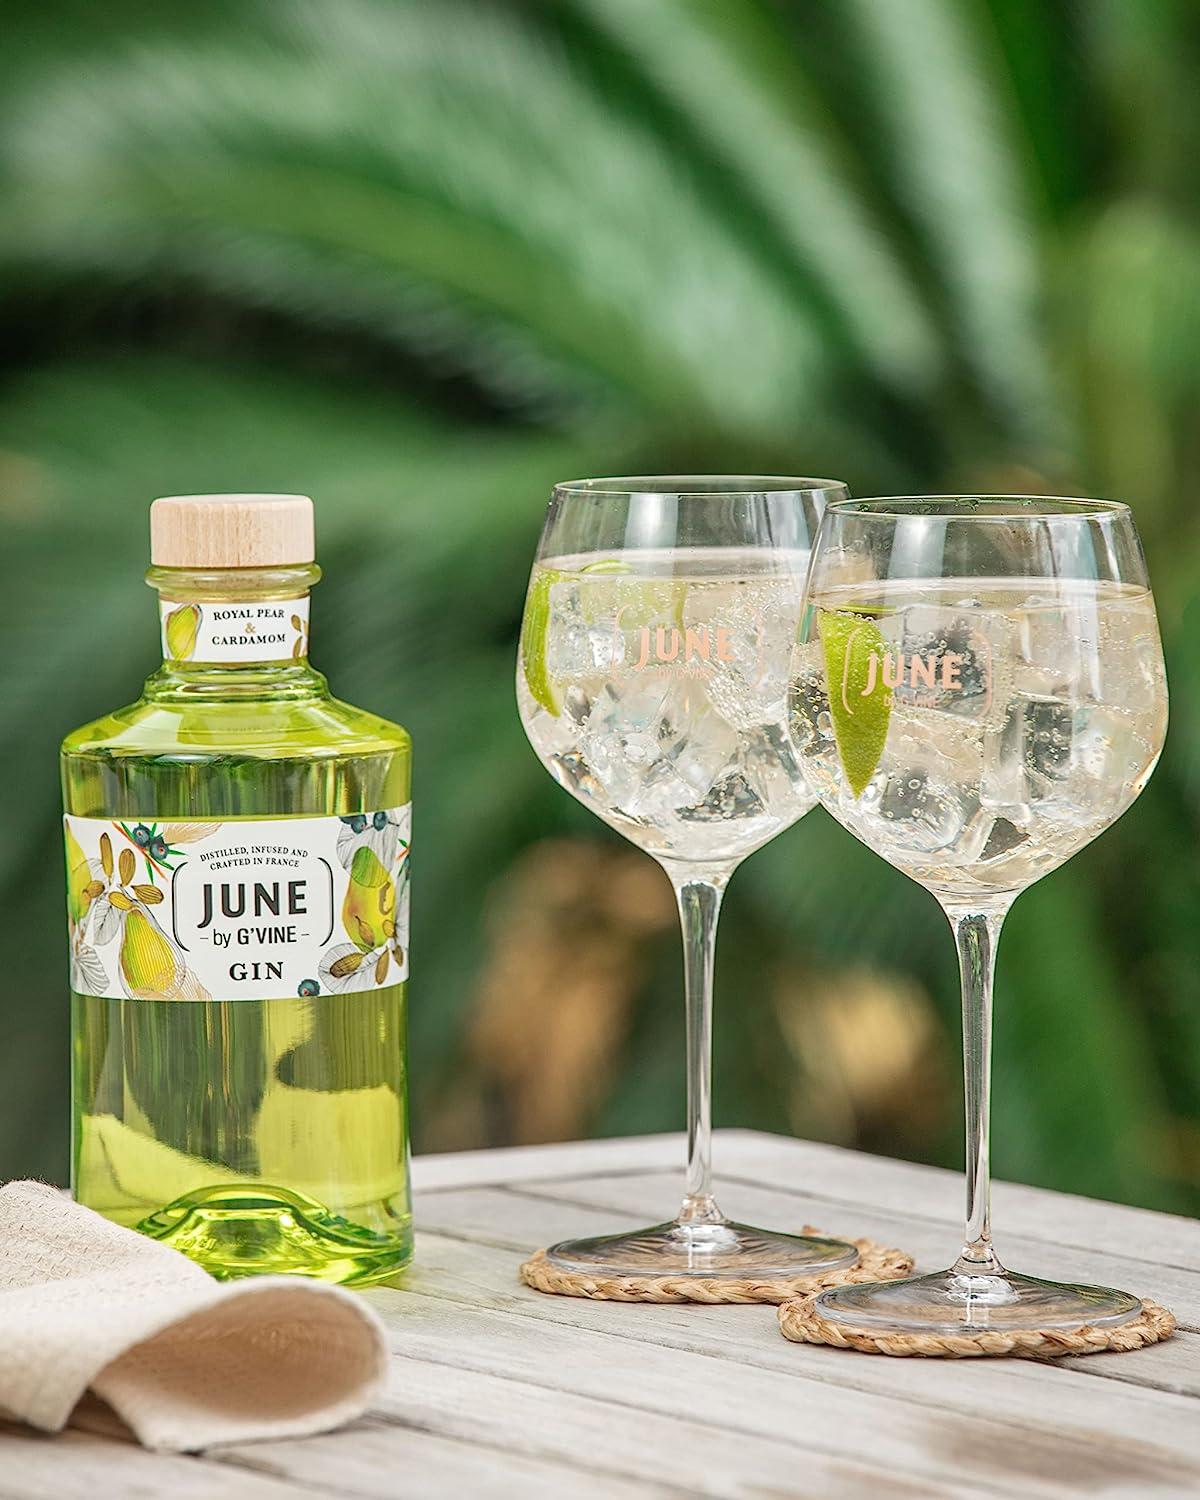 June by G'Vine Gin Royal Pear & Cardamom